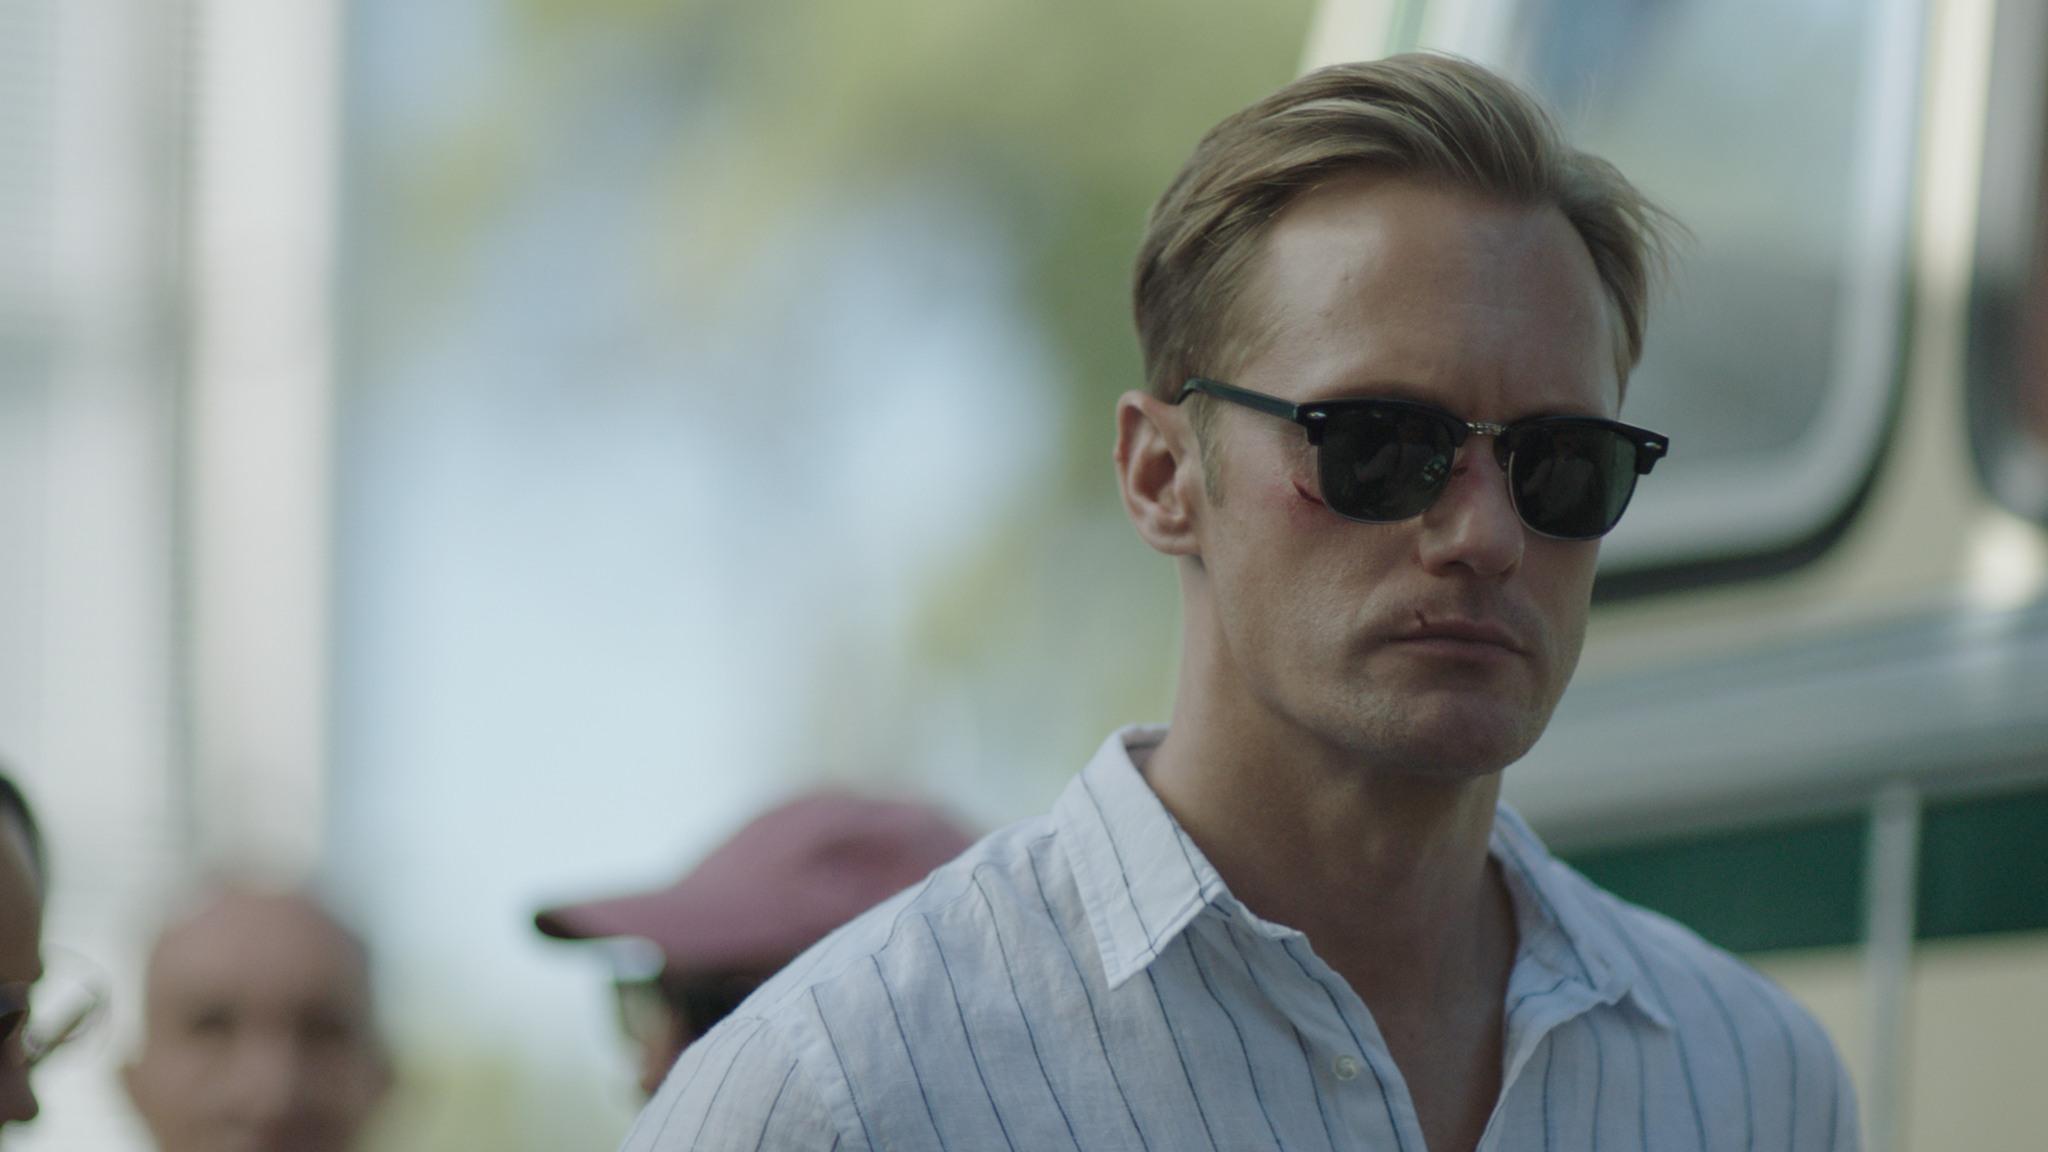 Still from the film 'Infinity Pool' showing Swedish film star Alexander Skarsgård wearing sunglasses.